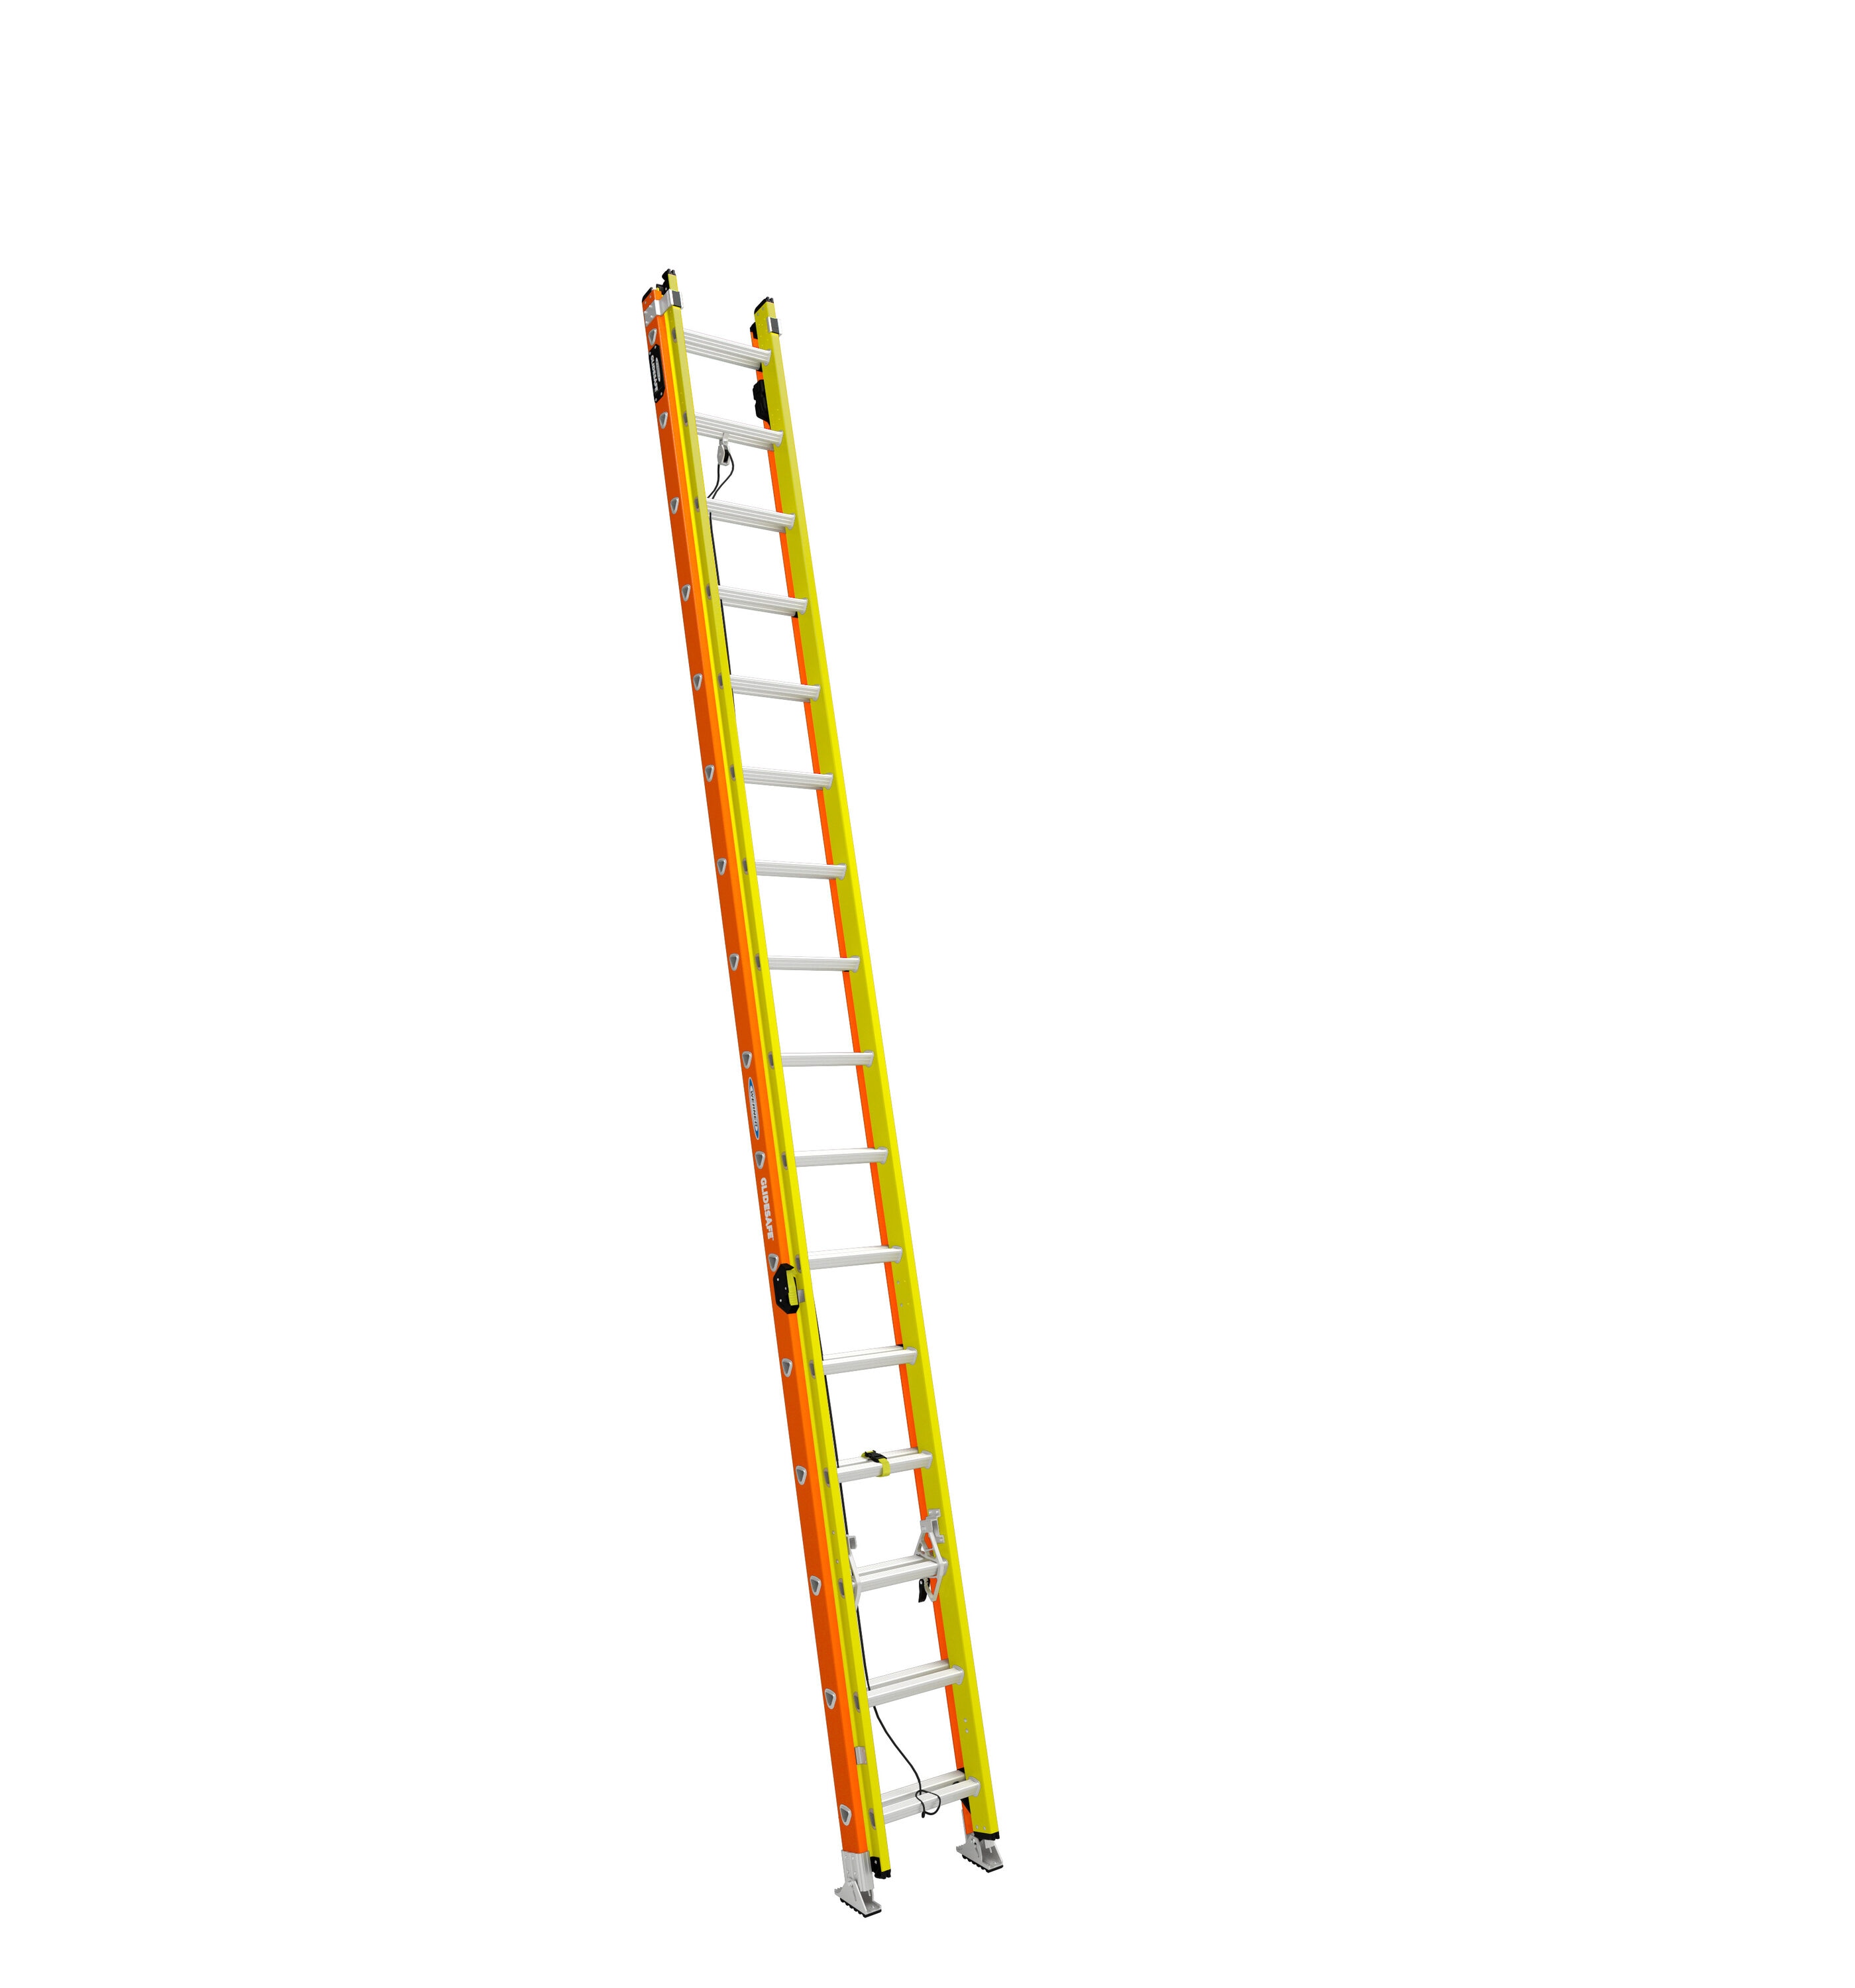 Commercial Extention Ladder 3,6m - 6,6m, SA LADDER - Cashbuild